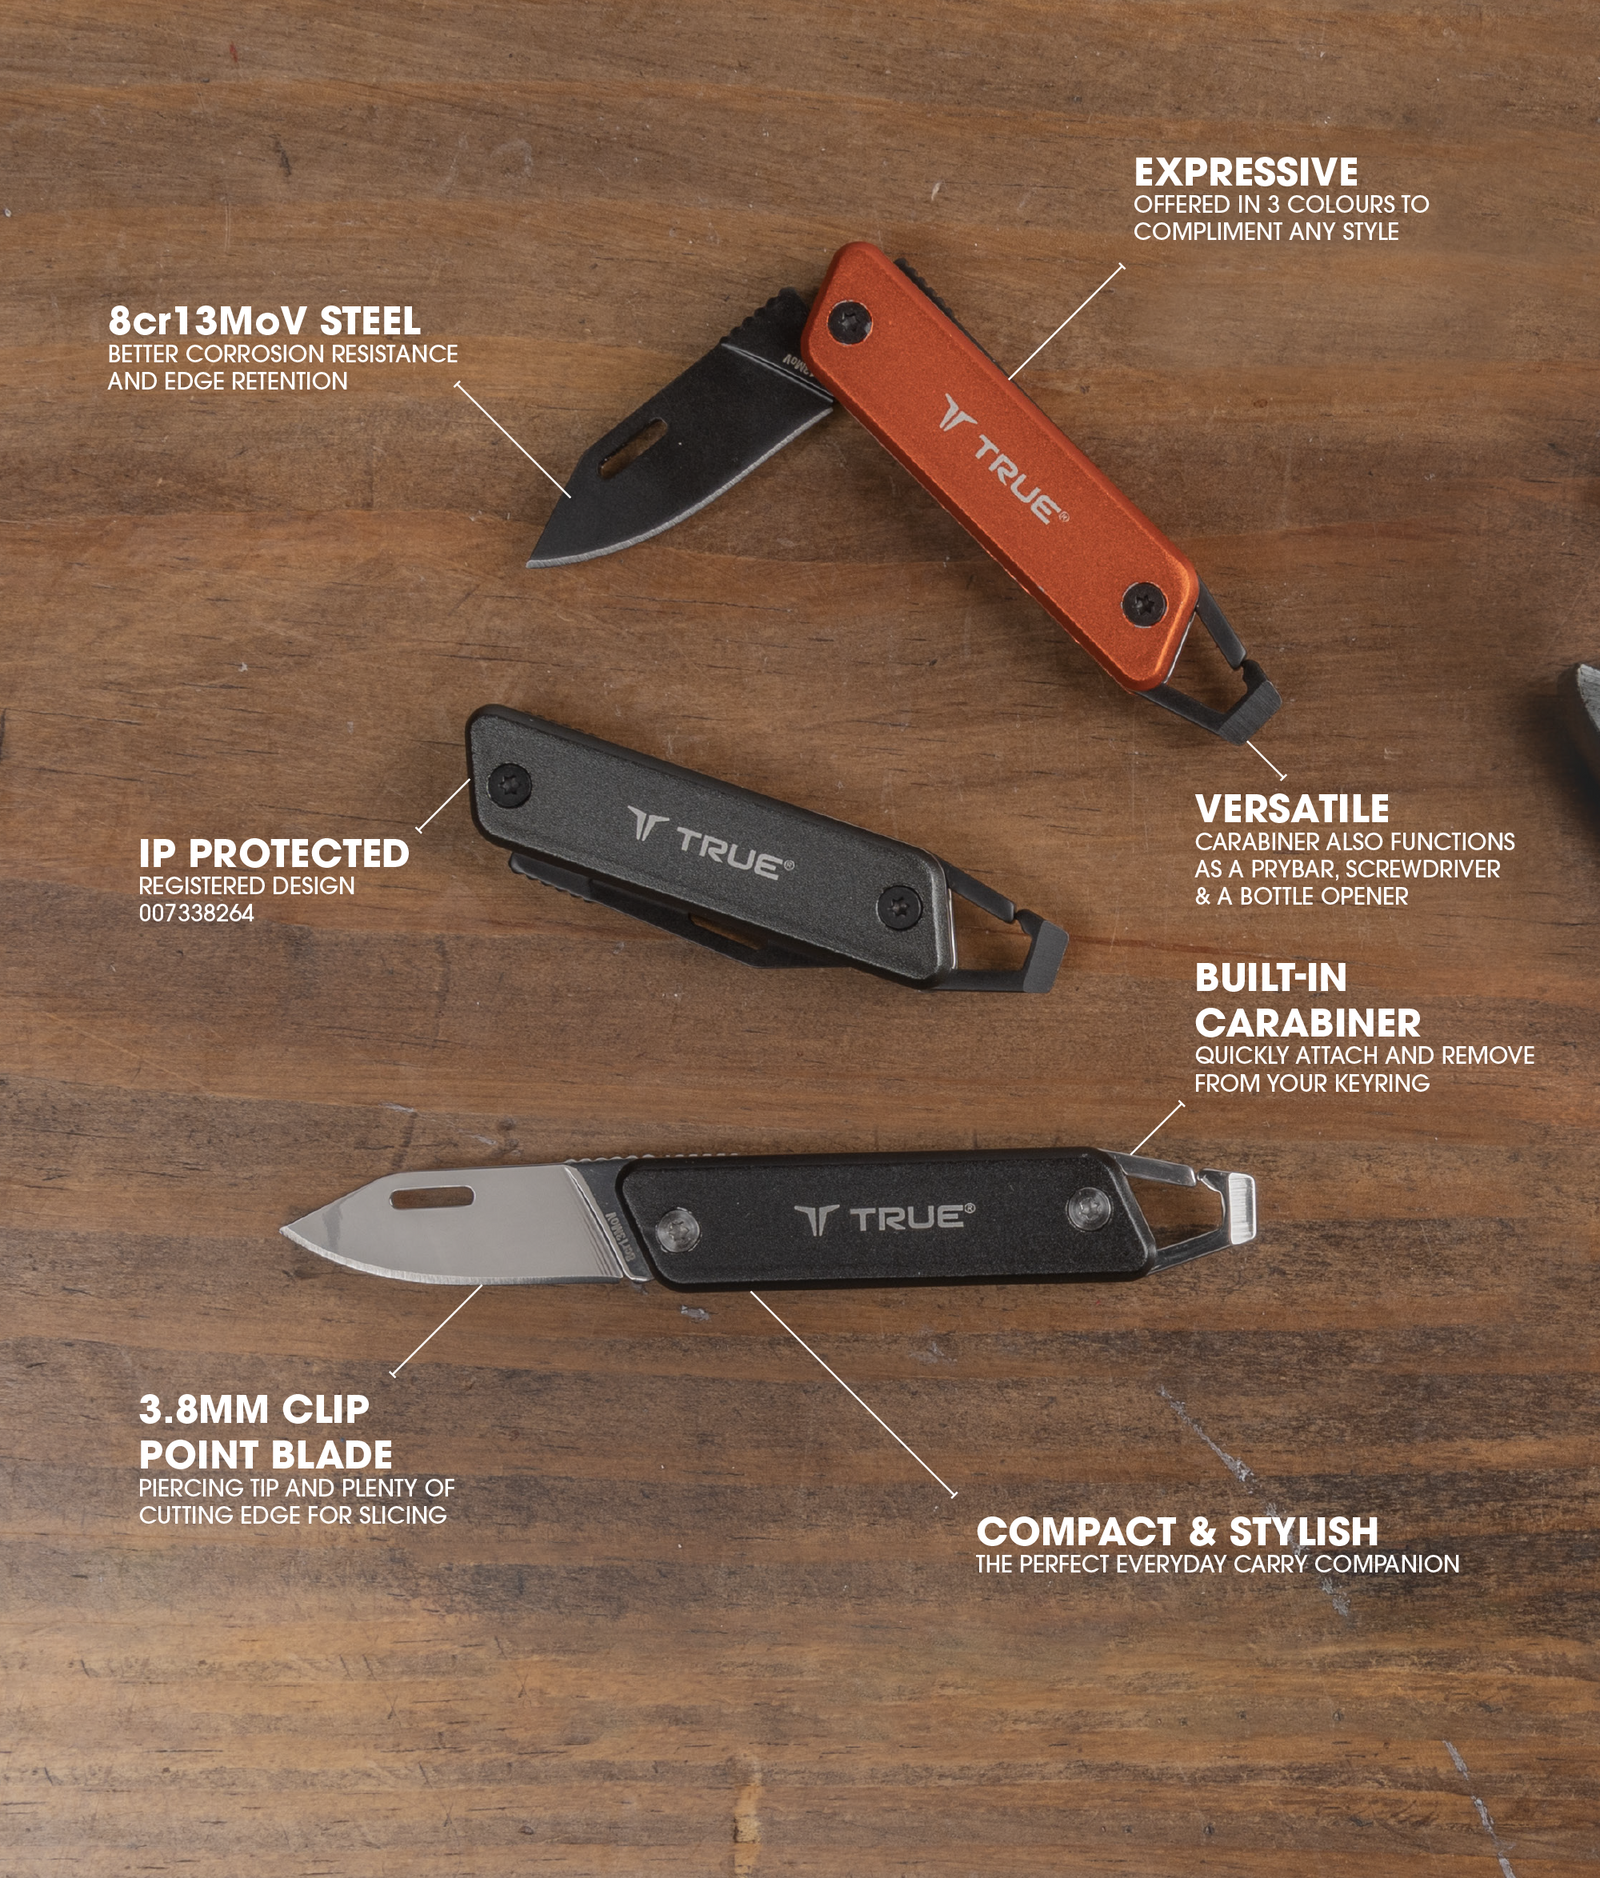 True Utility Modern Keychain | Small pocket friendly compact knife.